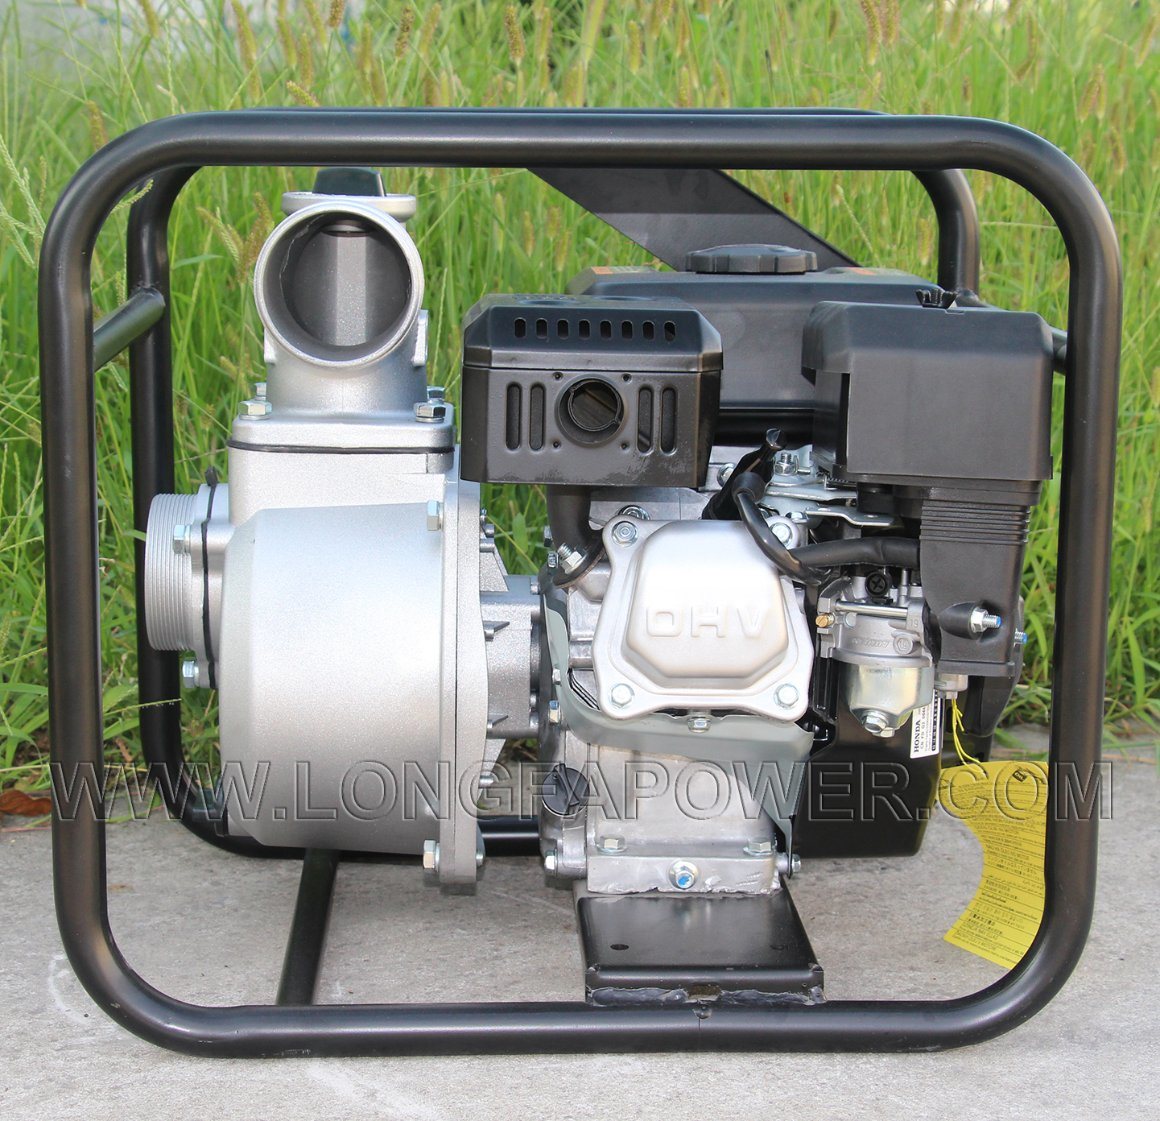 Powered by Oiriginal Honda Engine Gx160 Gx200 5.5HP 6.5HP 7.0HP Gasoline Petrol Water Pump